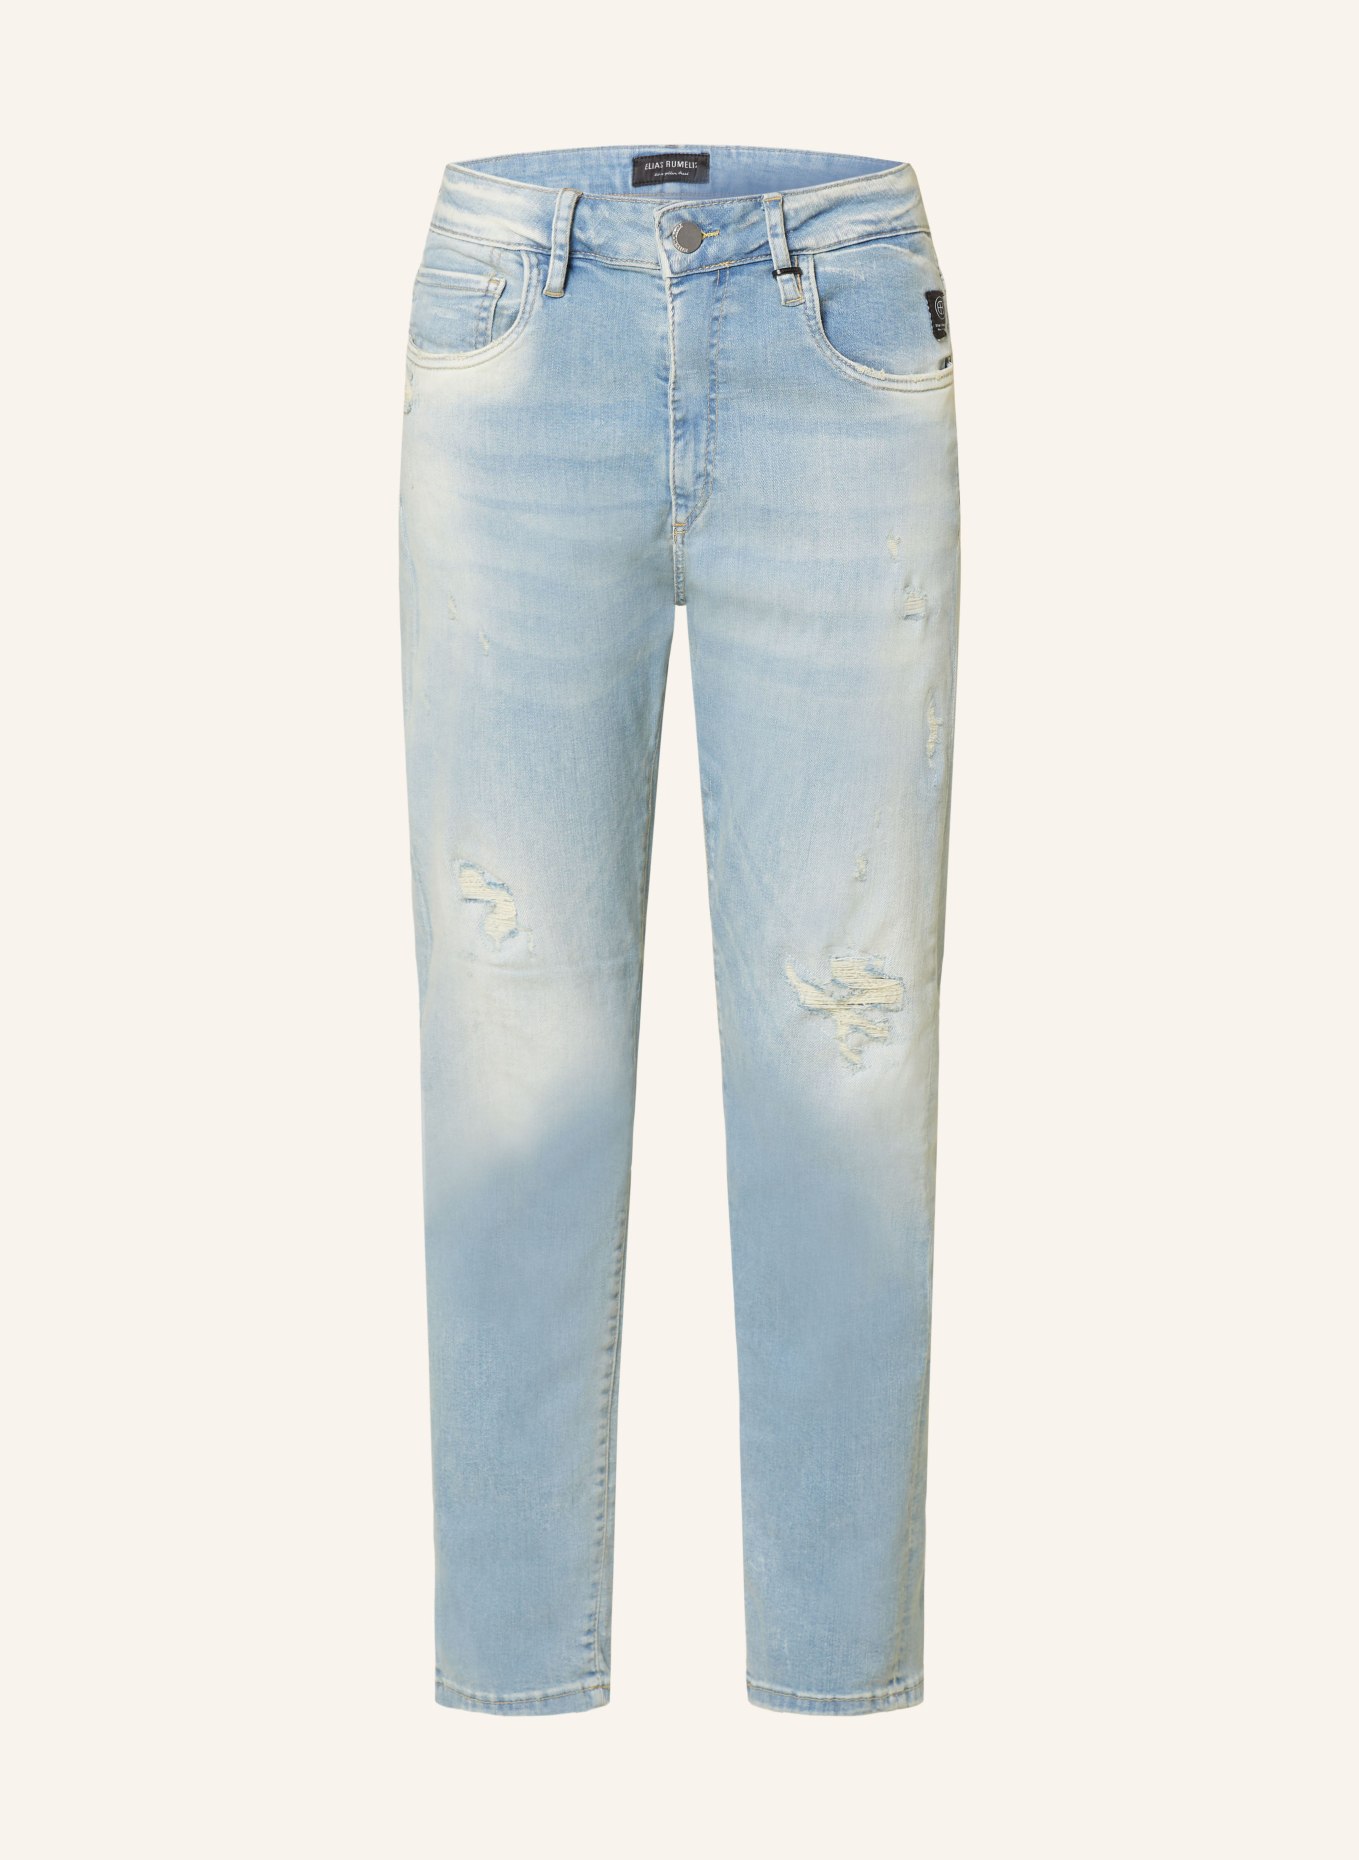 ELIAS RUMELIS Destroyed Jeans ERLEONA, Farbe: 568 berry blue (Bild 1)